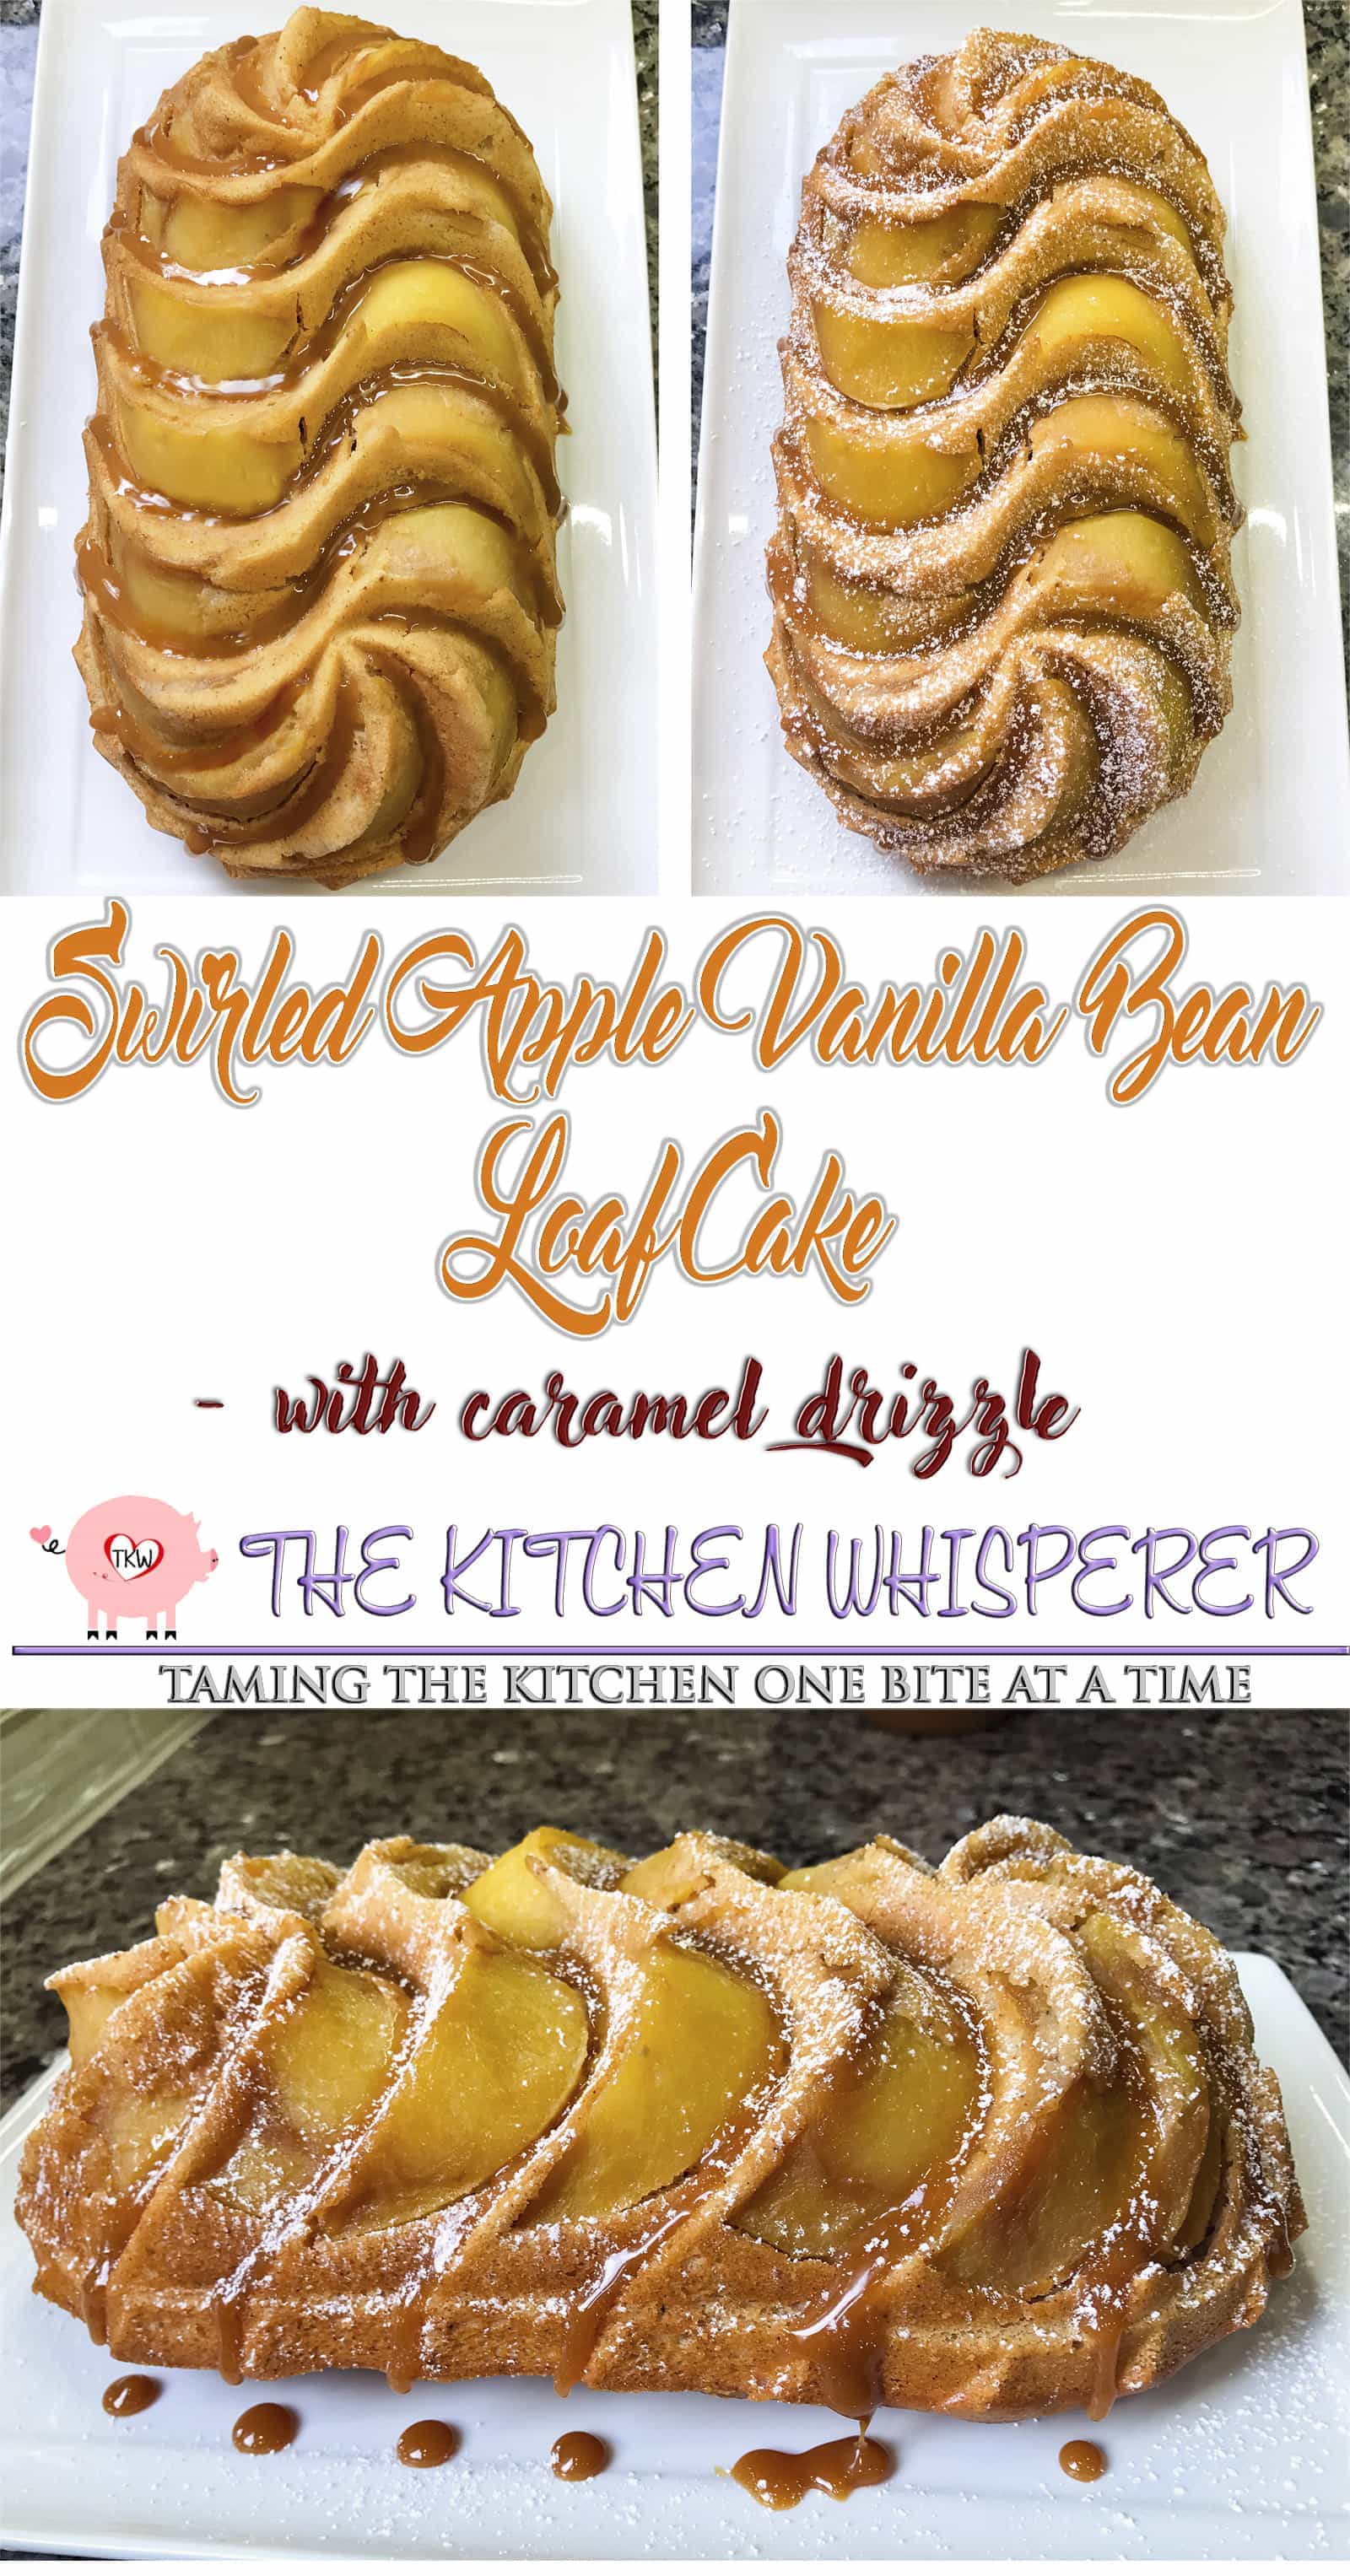 https://www.thekitchenwhisperer.net/wp-content/uploads/2017/05/Swirled-Apple-Vanilla-Caramel-Cake-Collage3.jpg